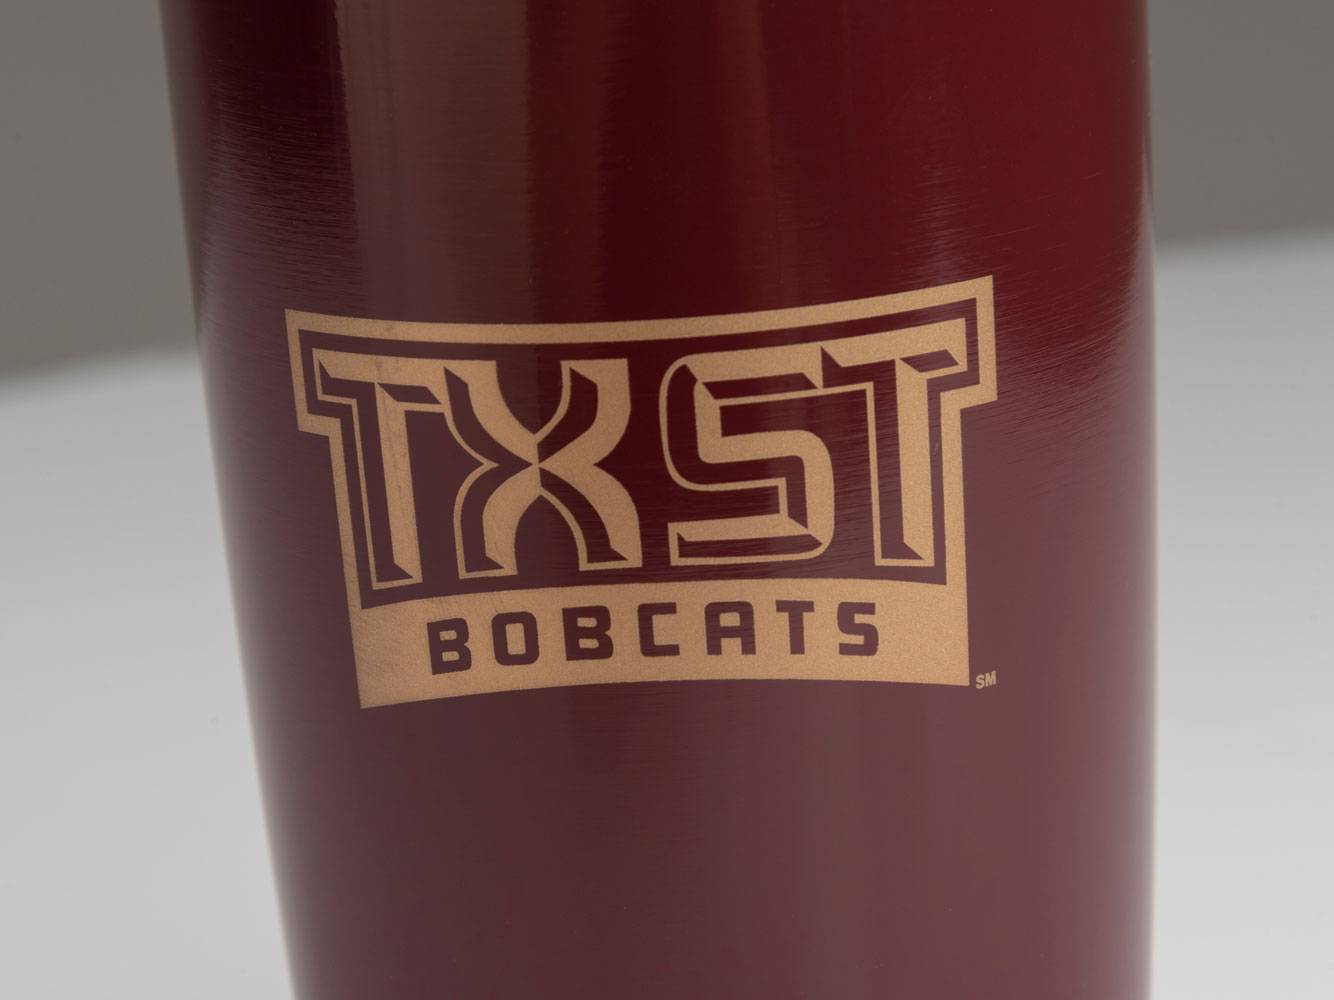 TXST Bobcats logo on a maroon mug